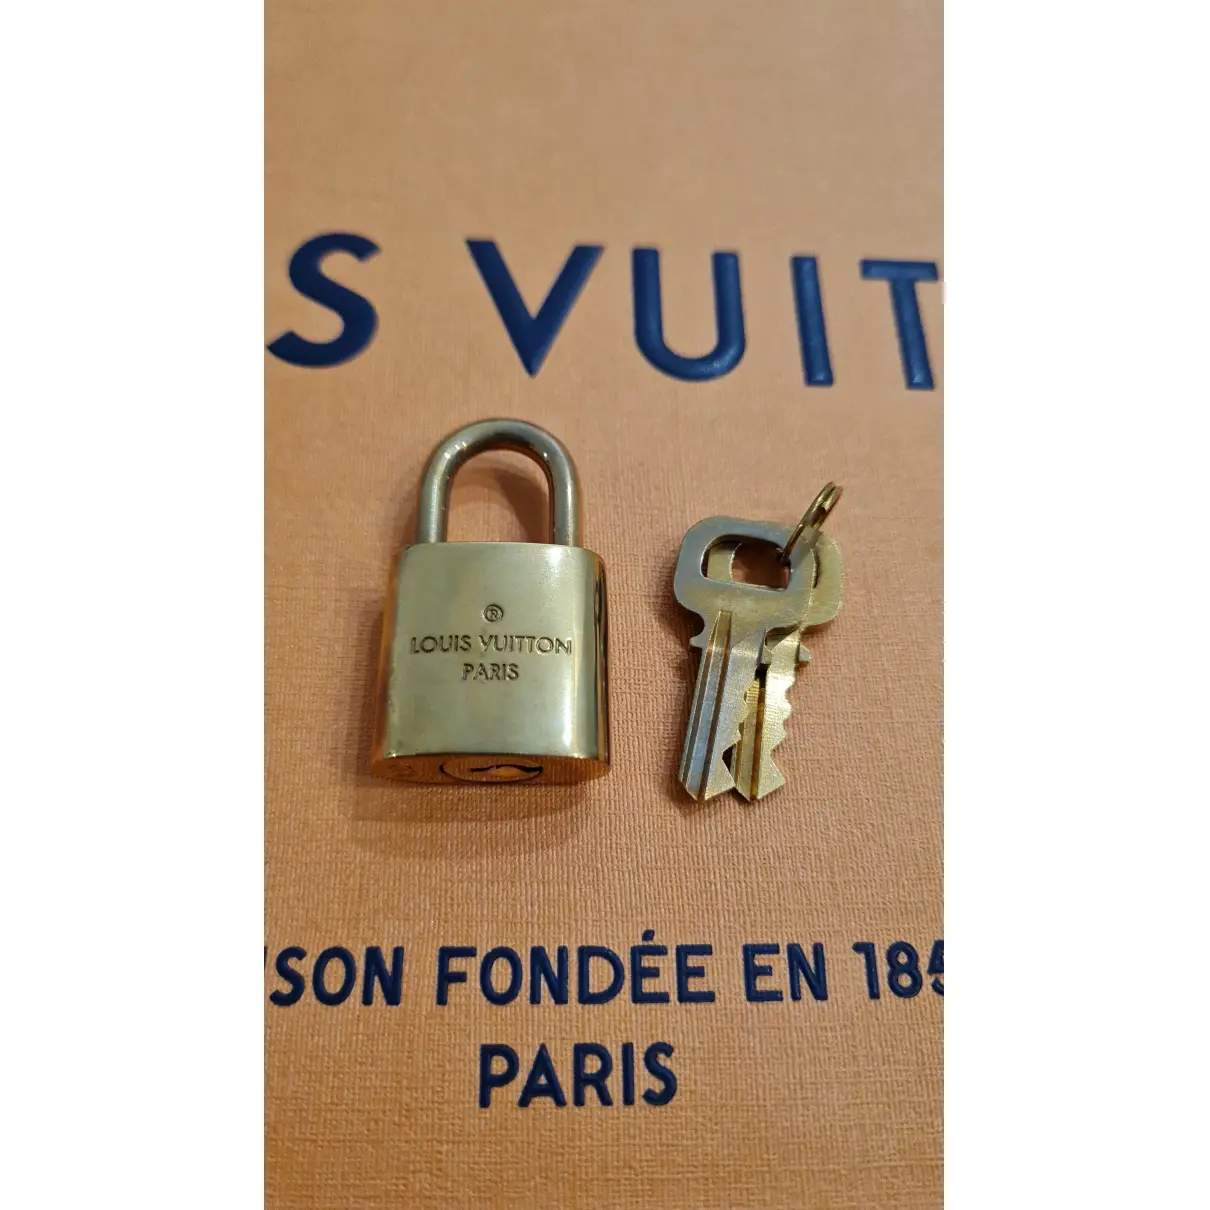 Buy Louis Vuitton Cadenas bag charm online